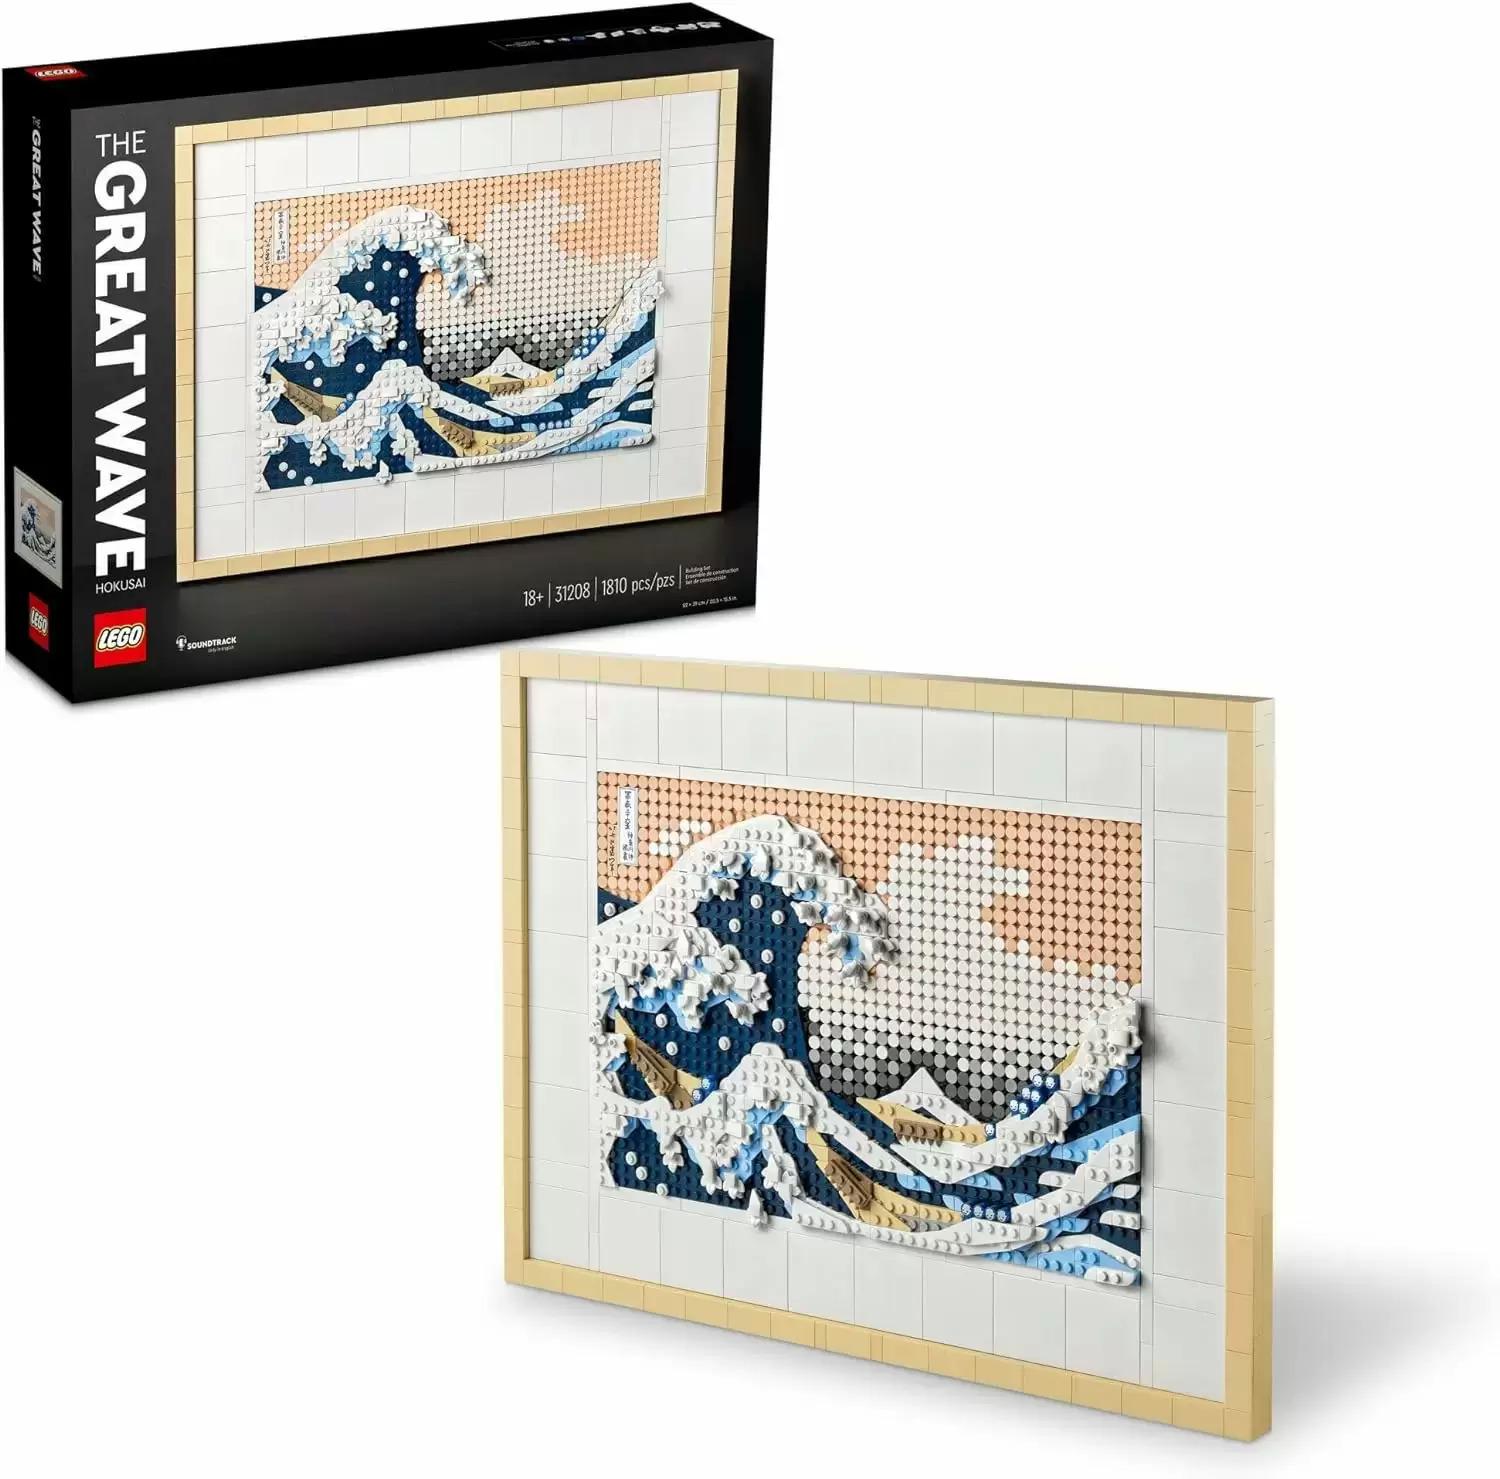 Lego Art Hokusai The Great Wave 31208 for $79.99 Shipped